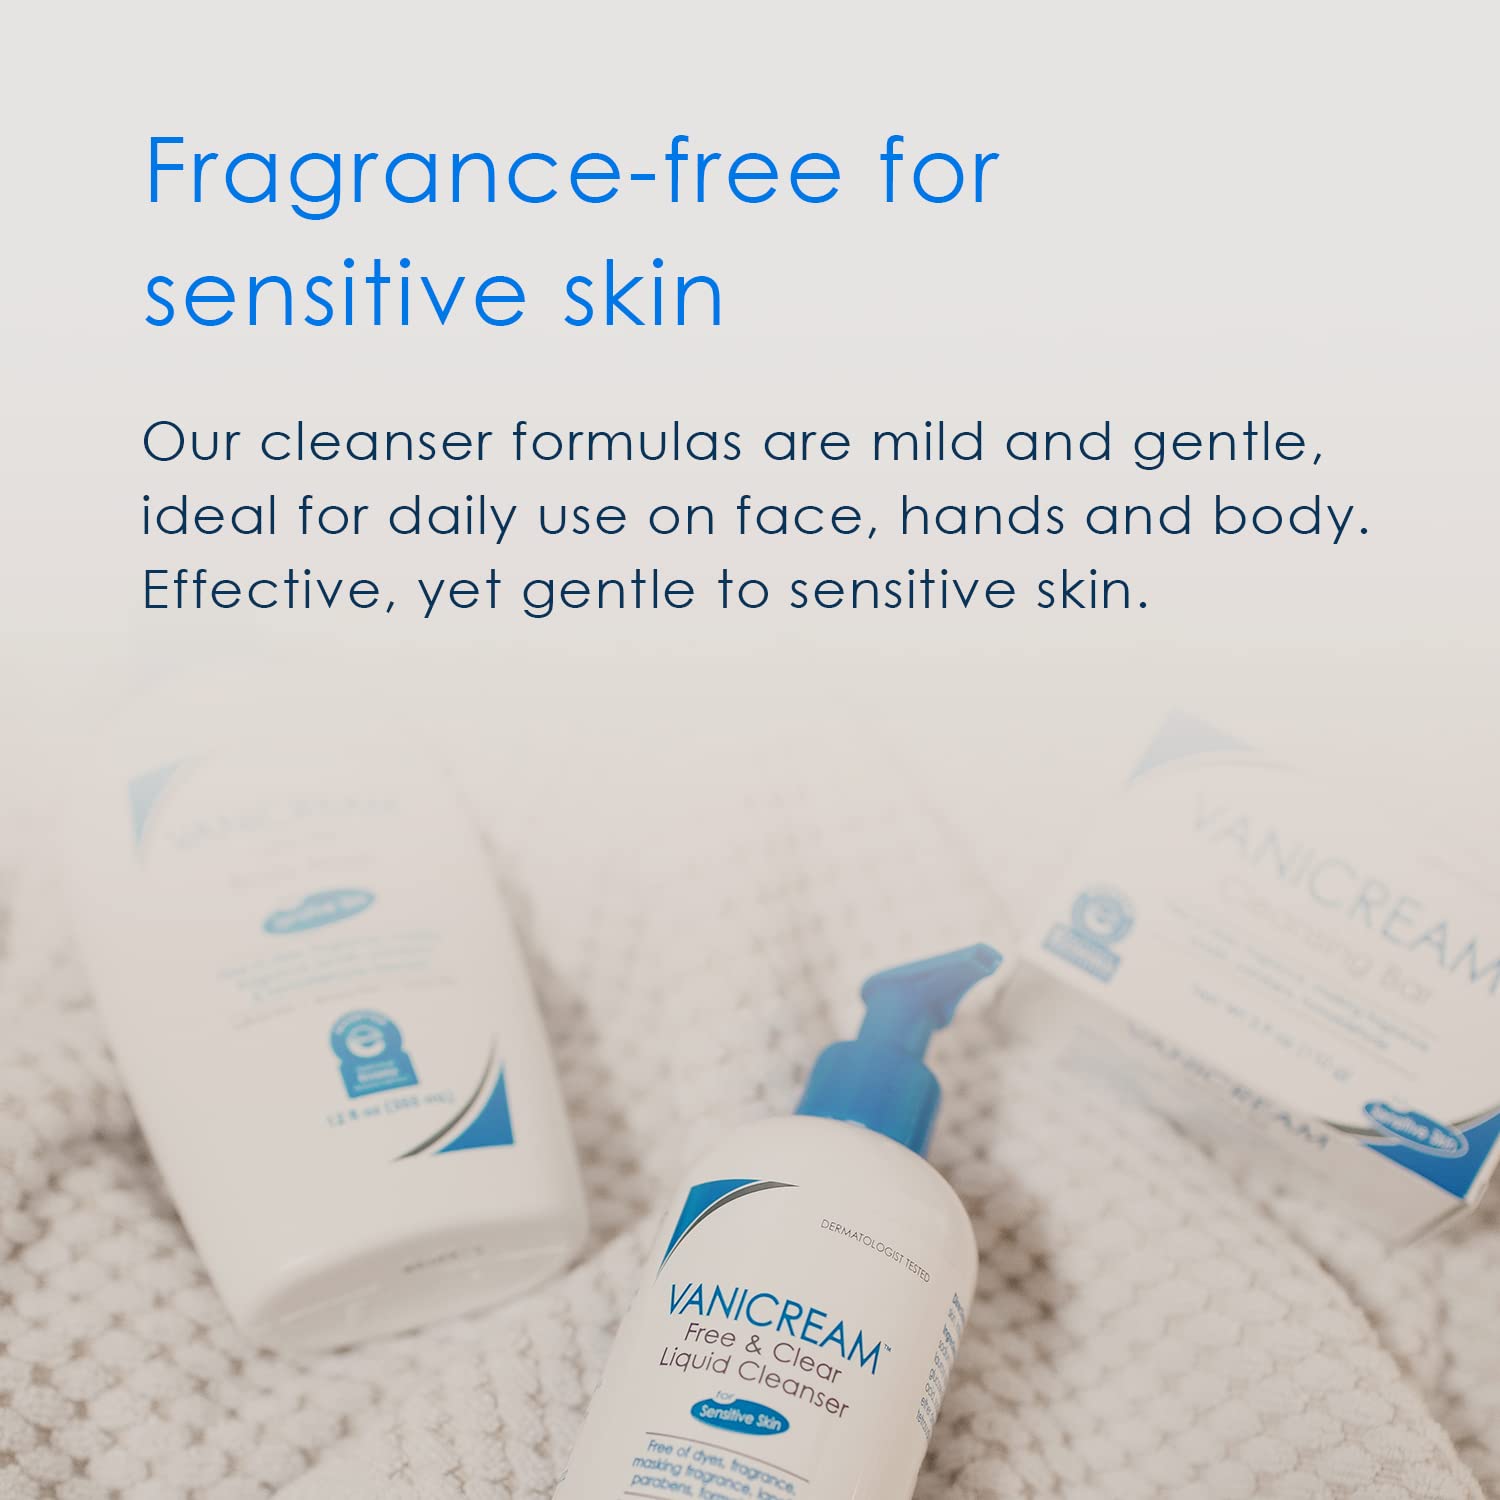 Vanicream Liquid Cleanser - 8 fl oz – Unscented, Gluten-Free Formula for Sensitive Skin : Beauty & Personal Care